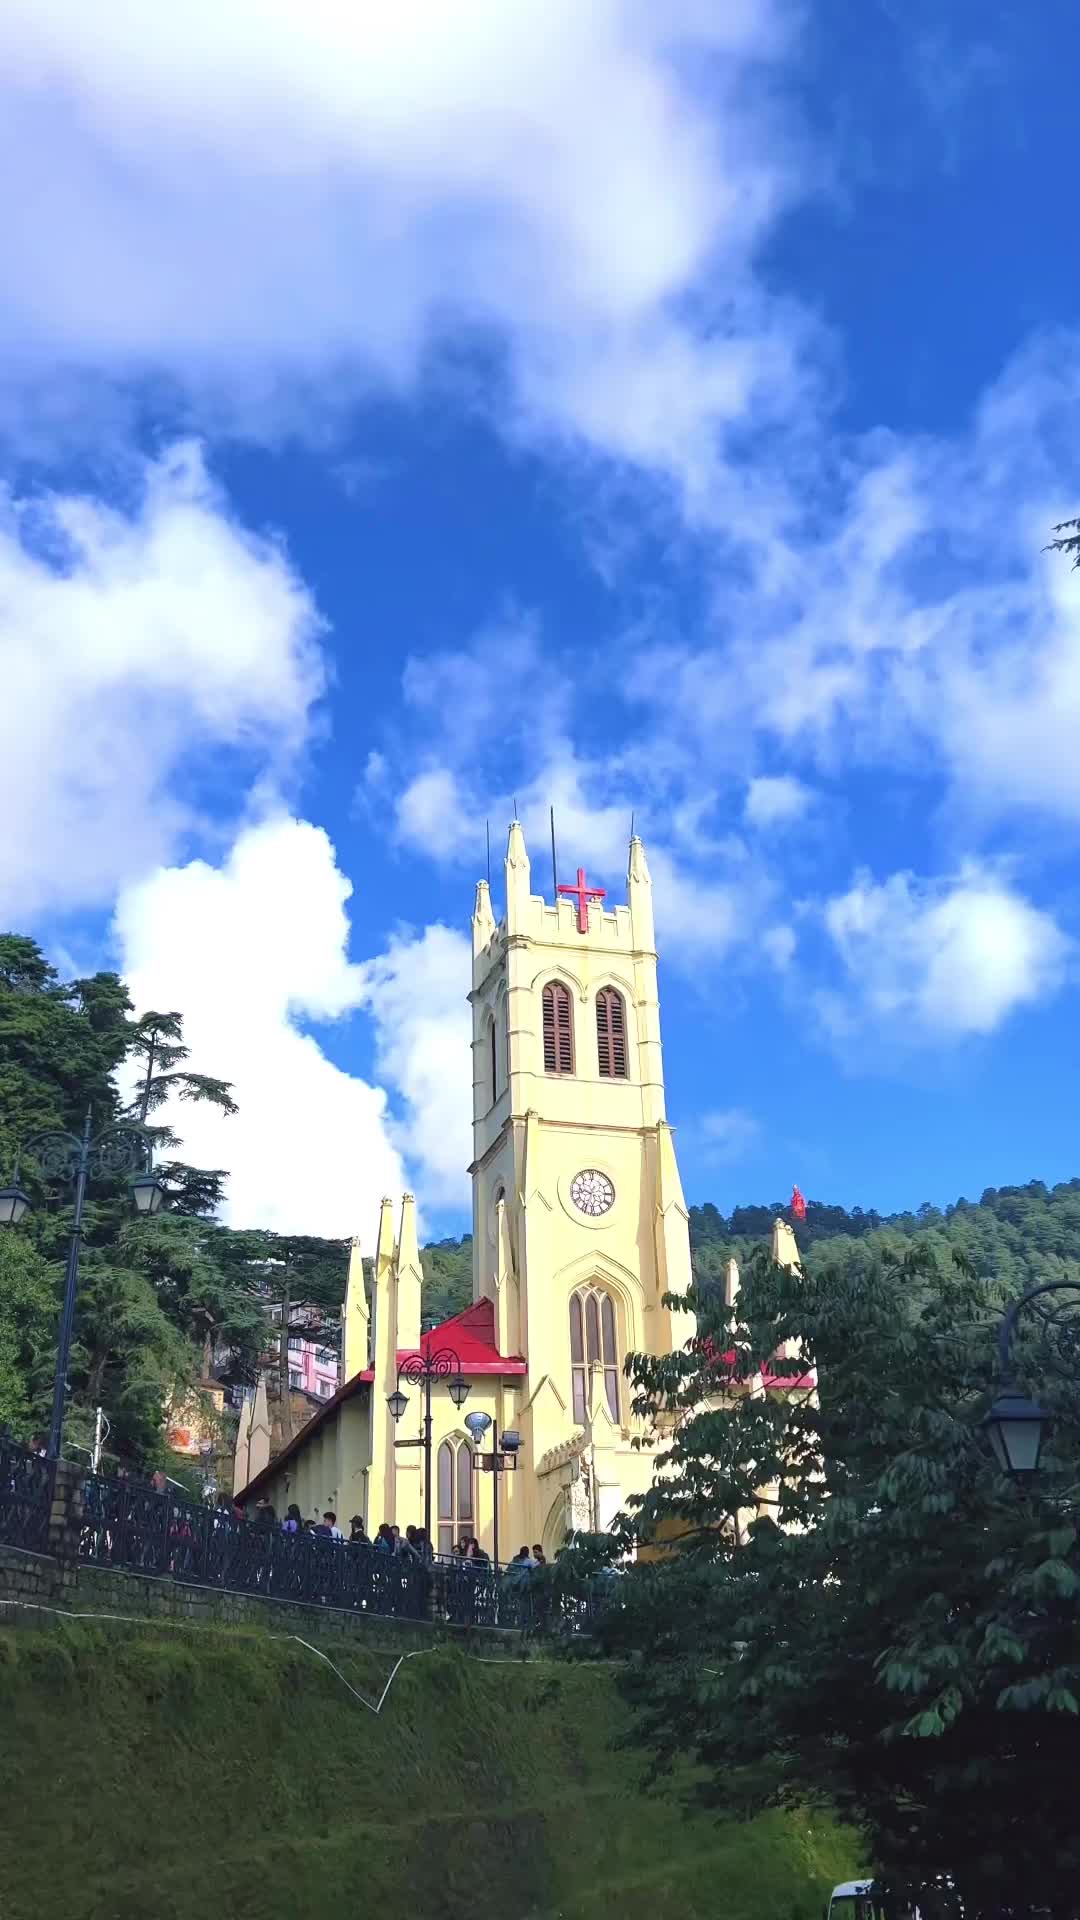 Discover Solitude at Christ Church Shimla